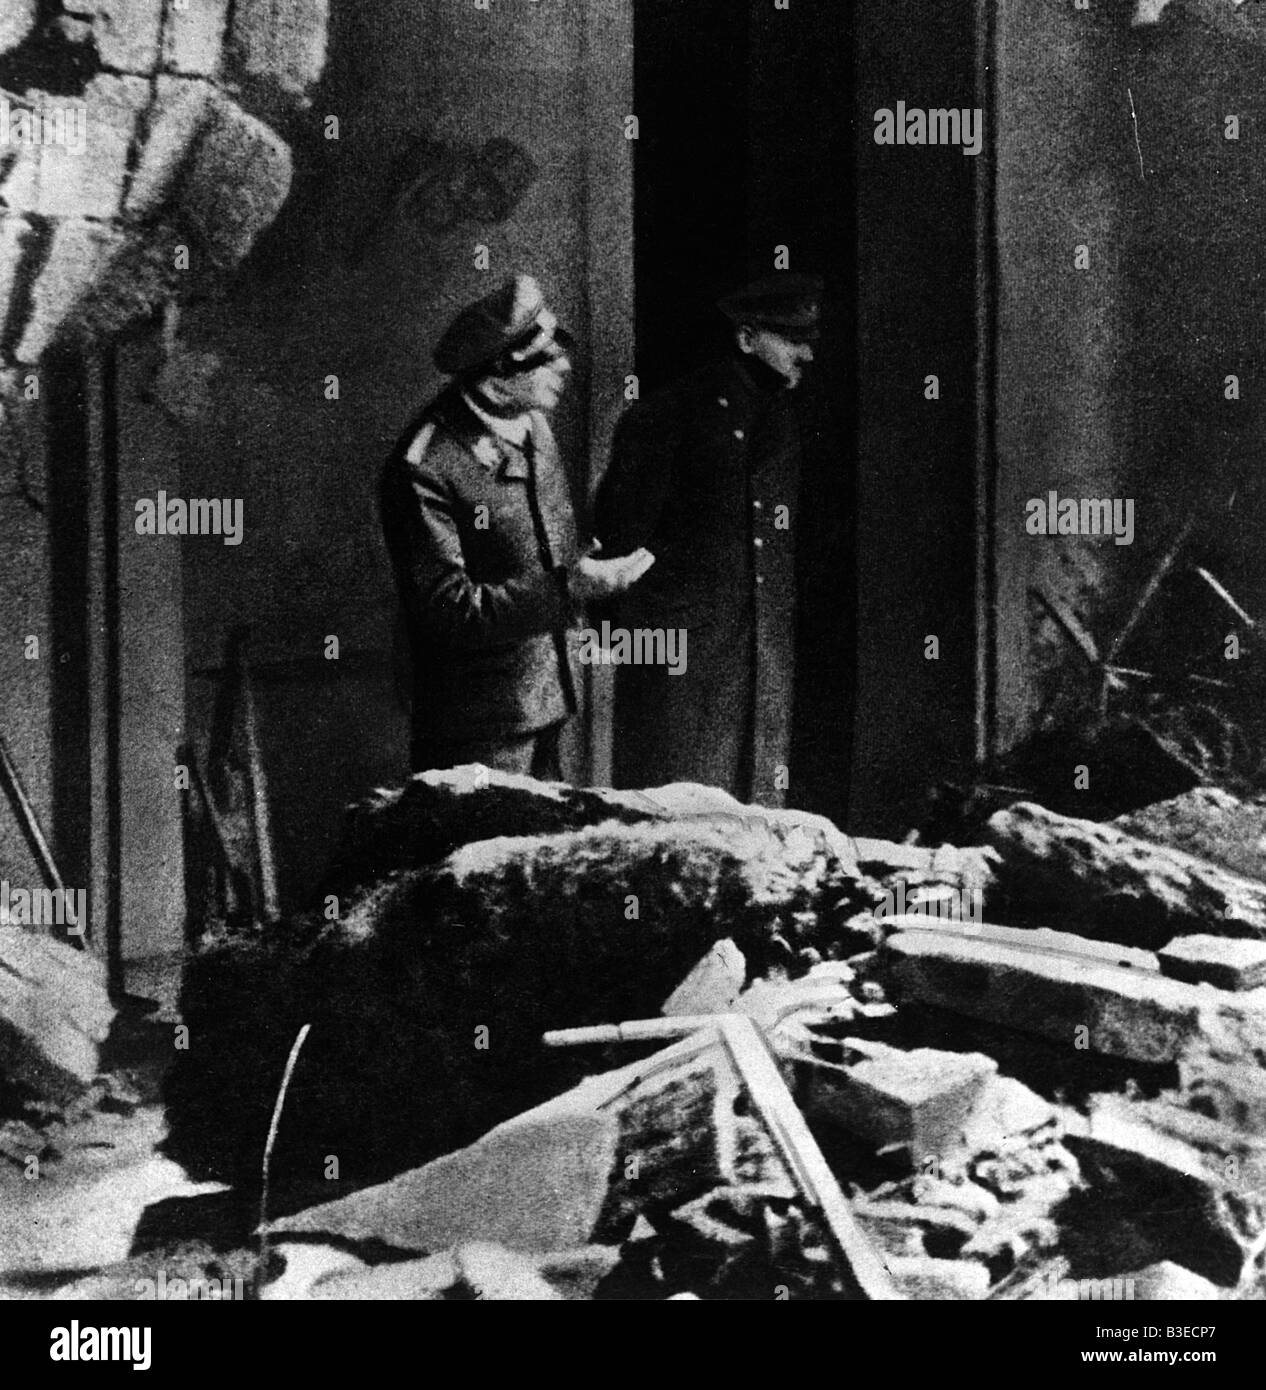 Hitler inspecting rubble / Last photo Stock Photo - Alamy